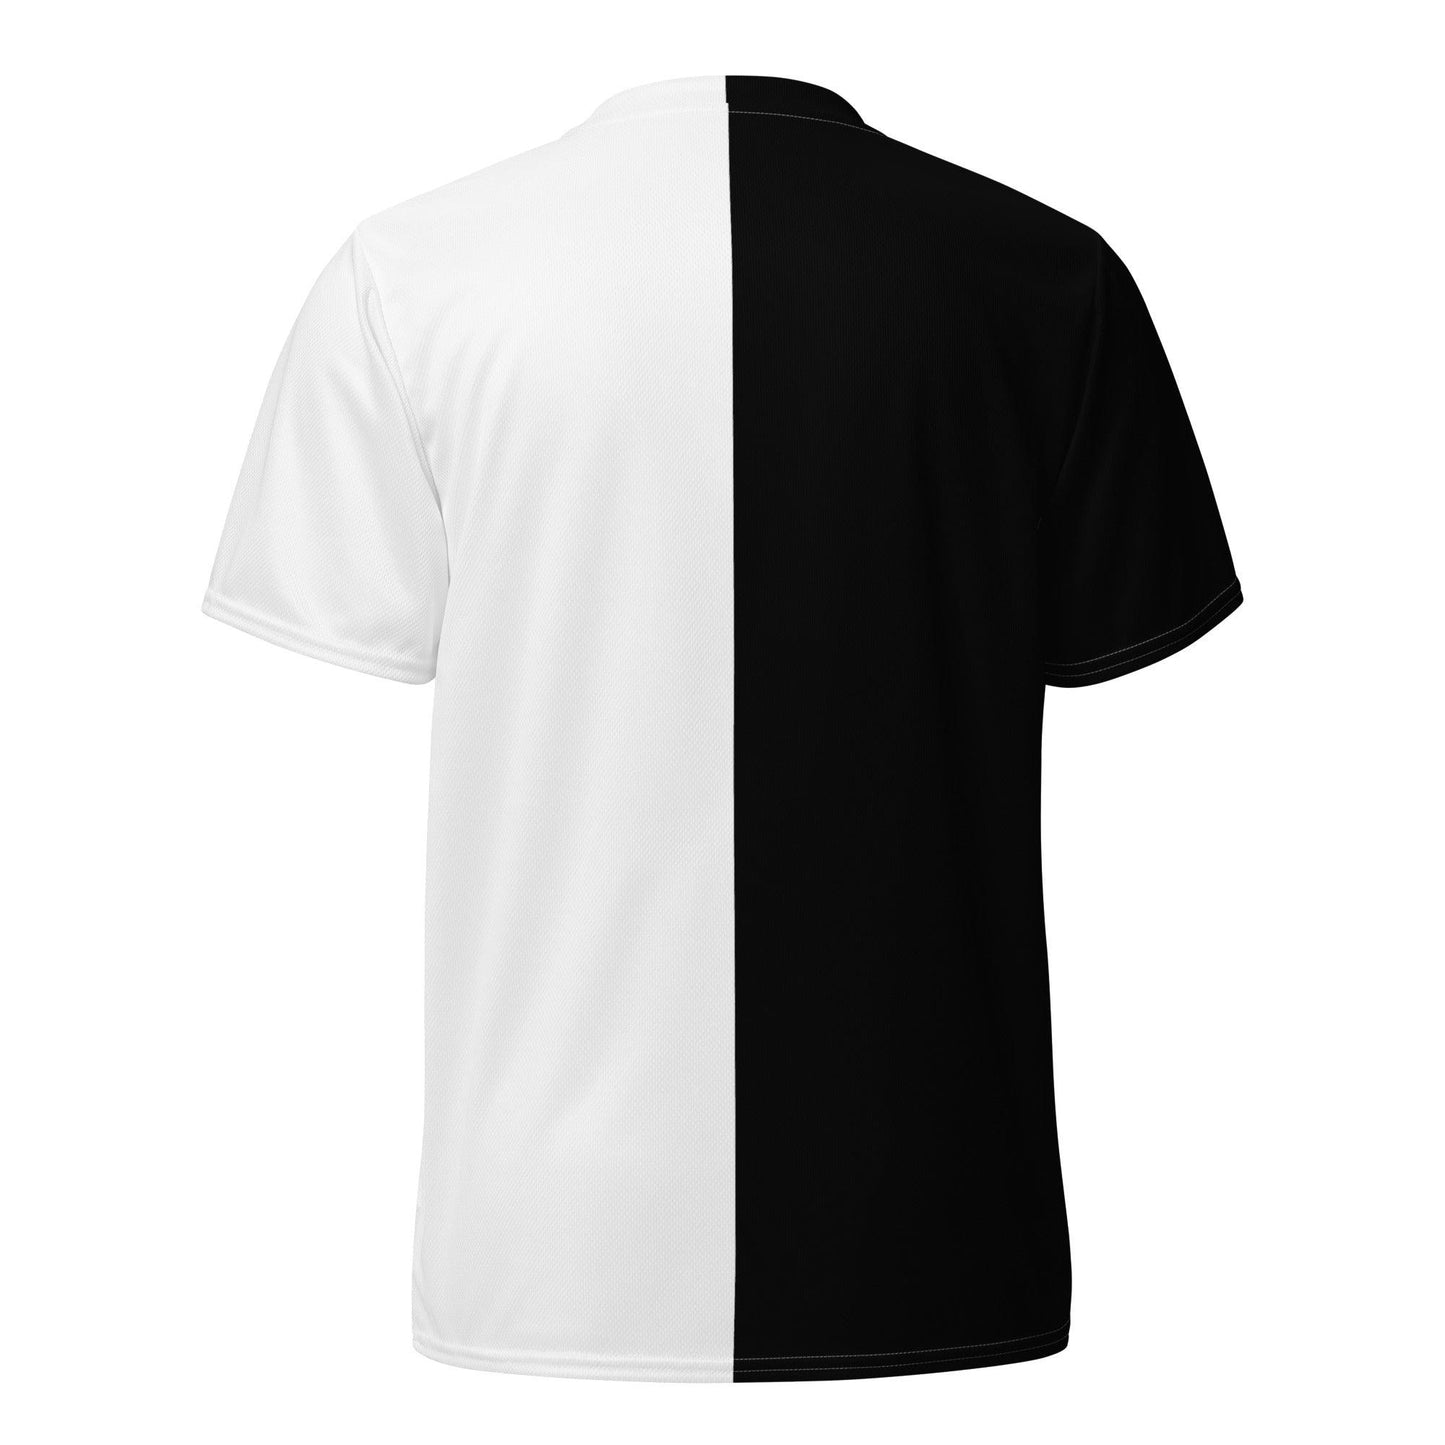 Half Black Half White - Unisex Sports Jersey - iSAW Company